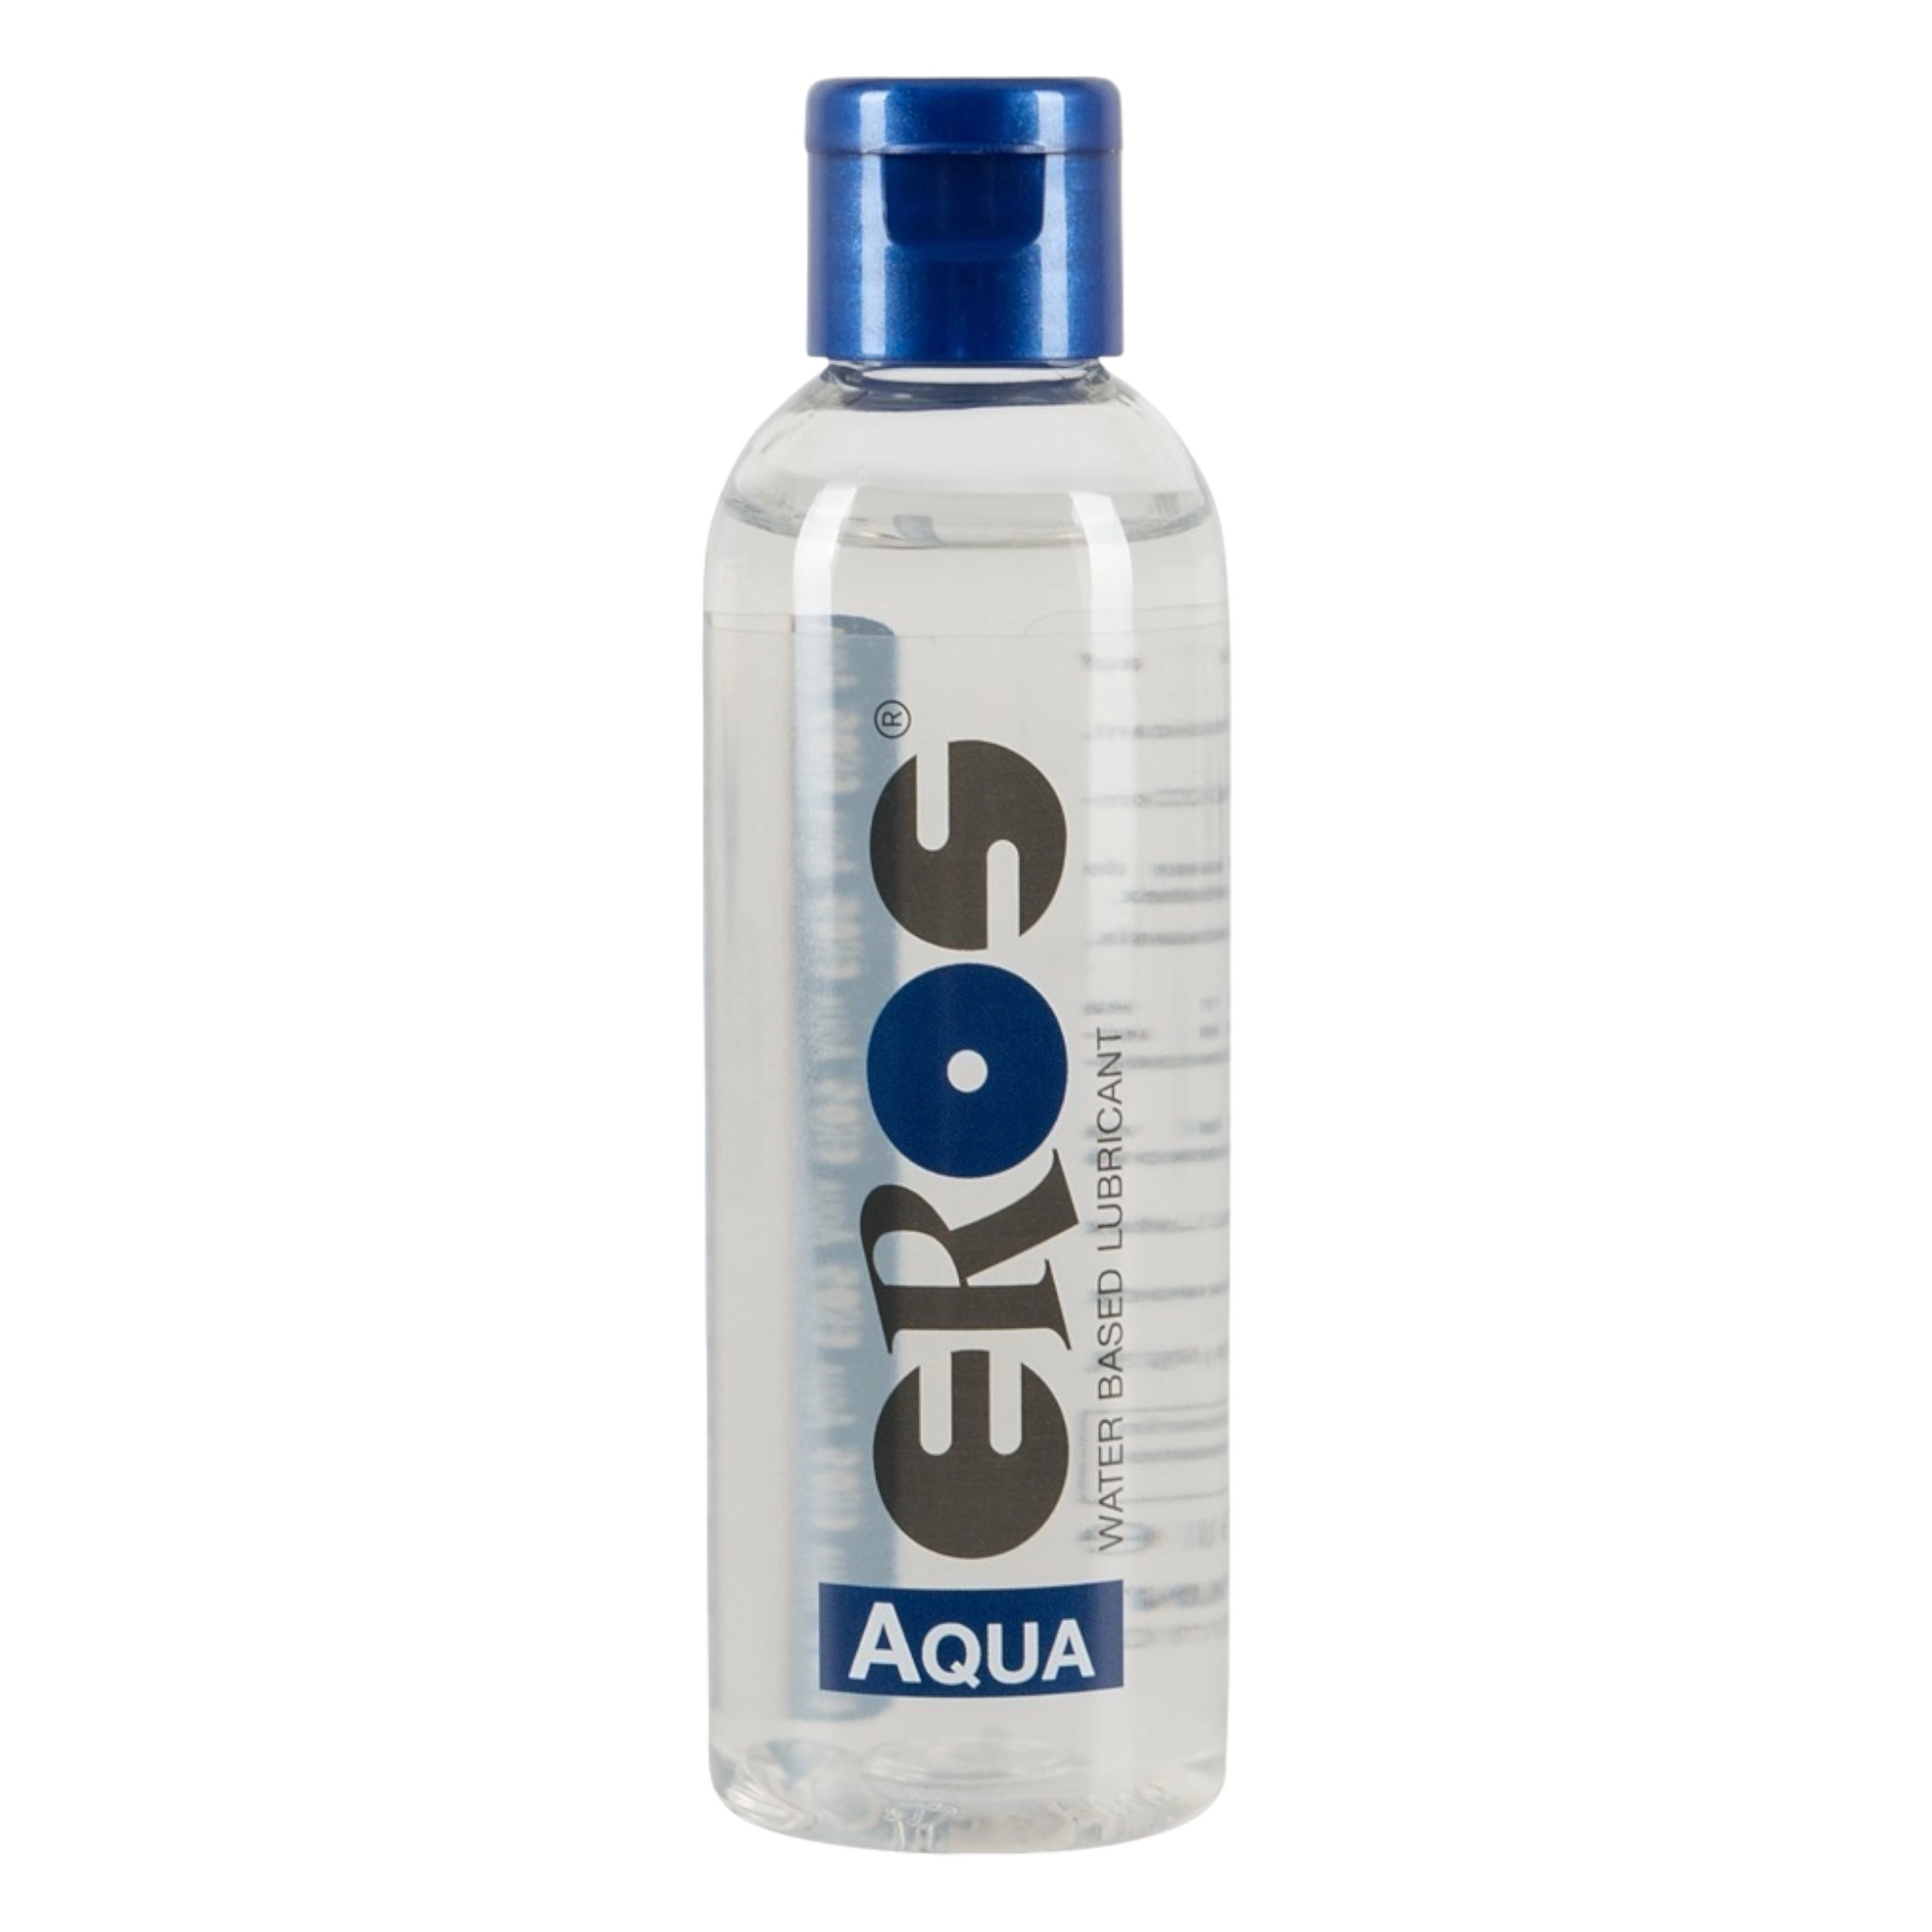 EROS Aqua - lubrikant na bázi vody ve flakonu (100 ml)